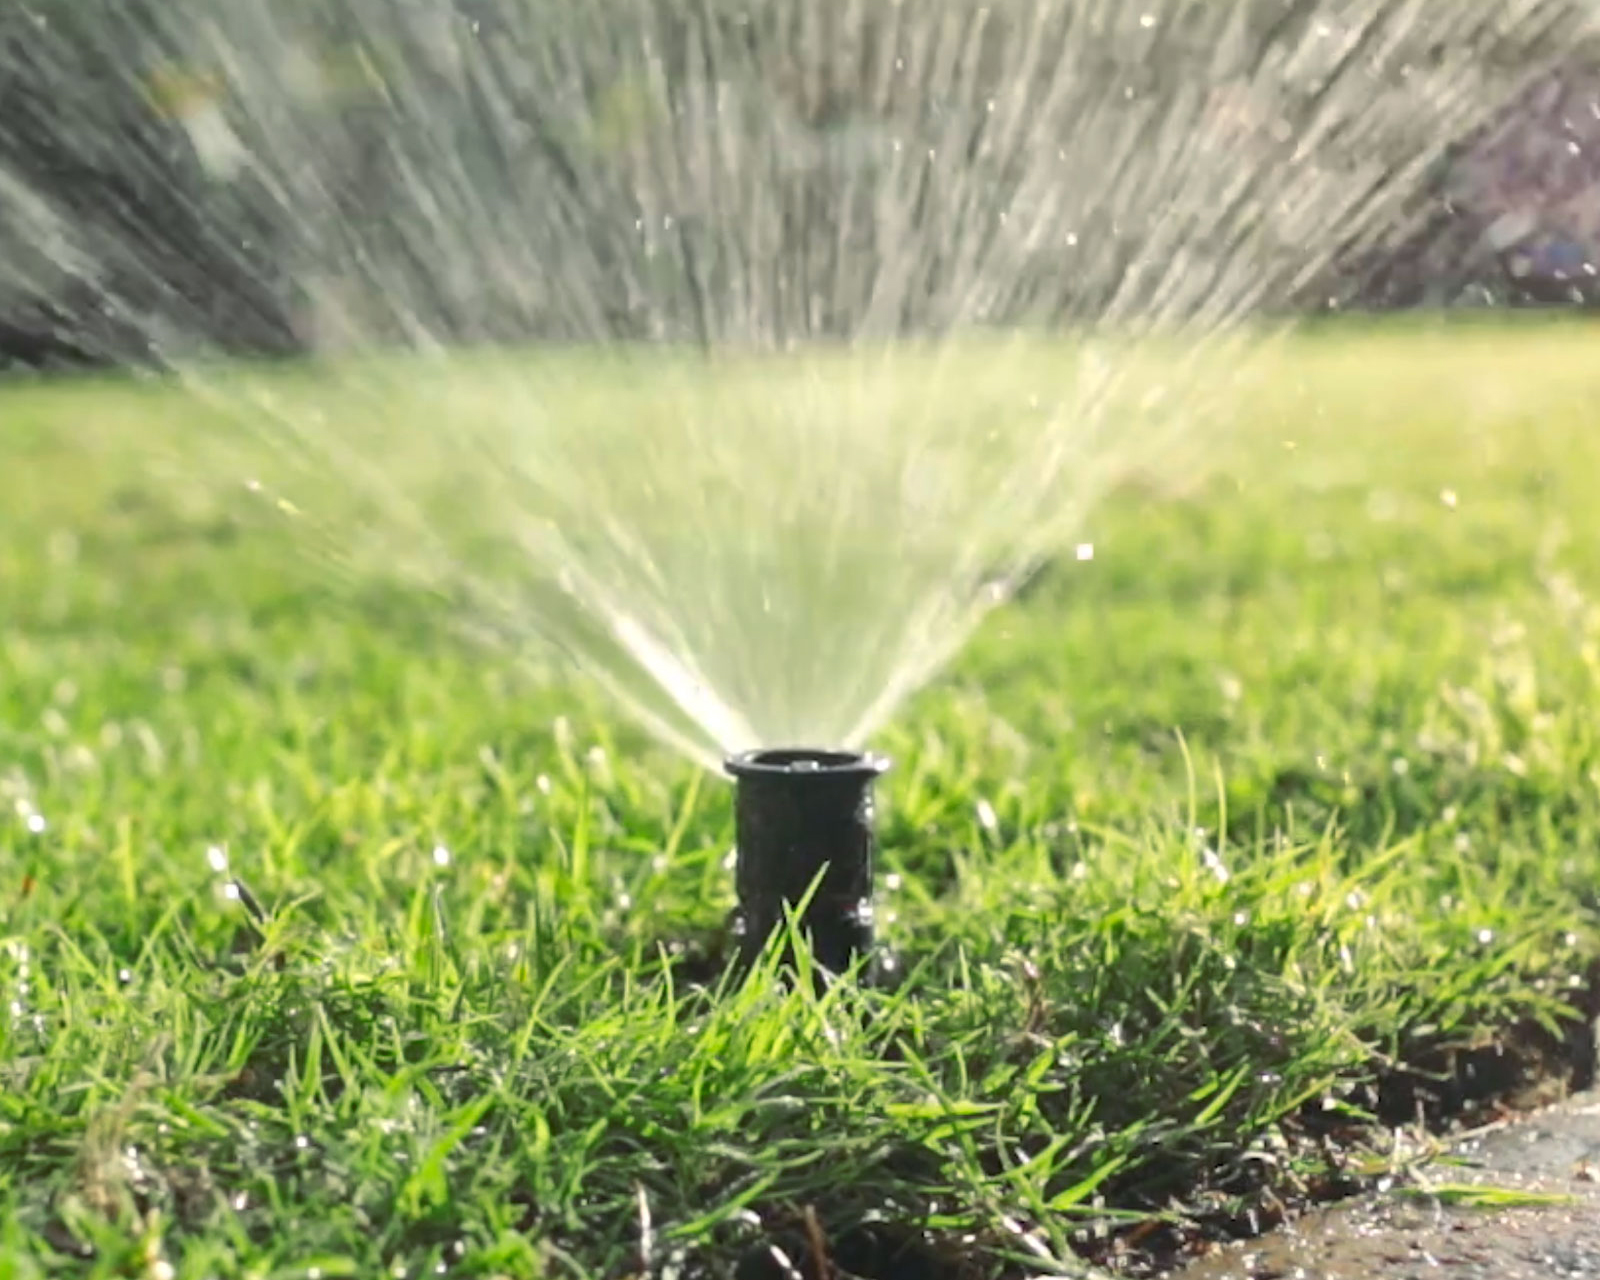 https://www.holmanindustries.com.au/wp-content/uploads/cleaning-pop-up-sprinklers-testing-nozzle.jpg